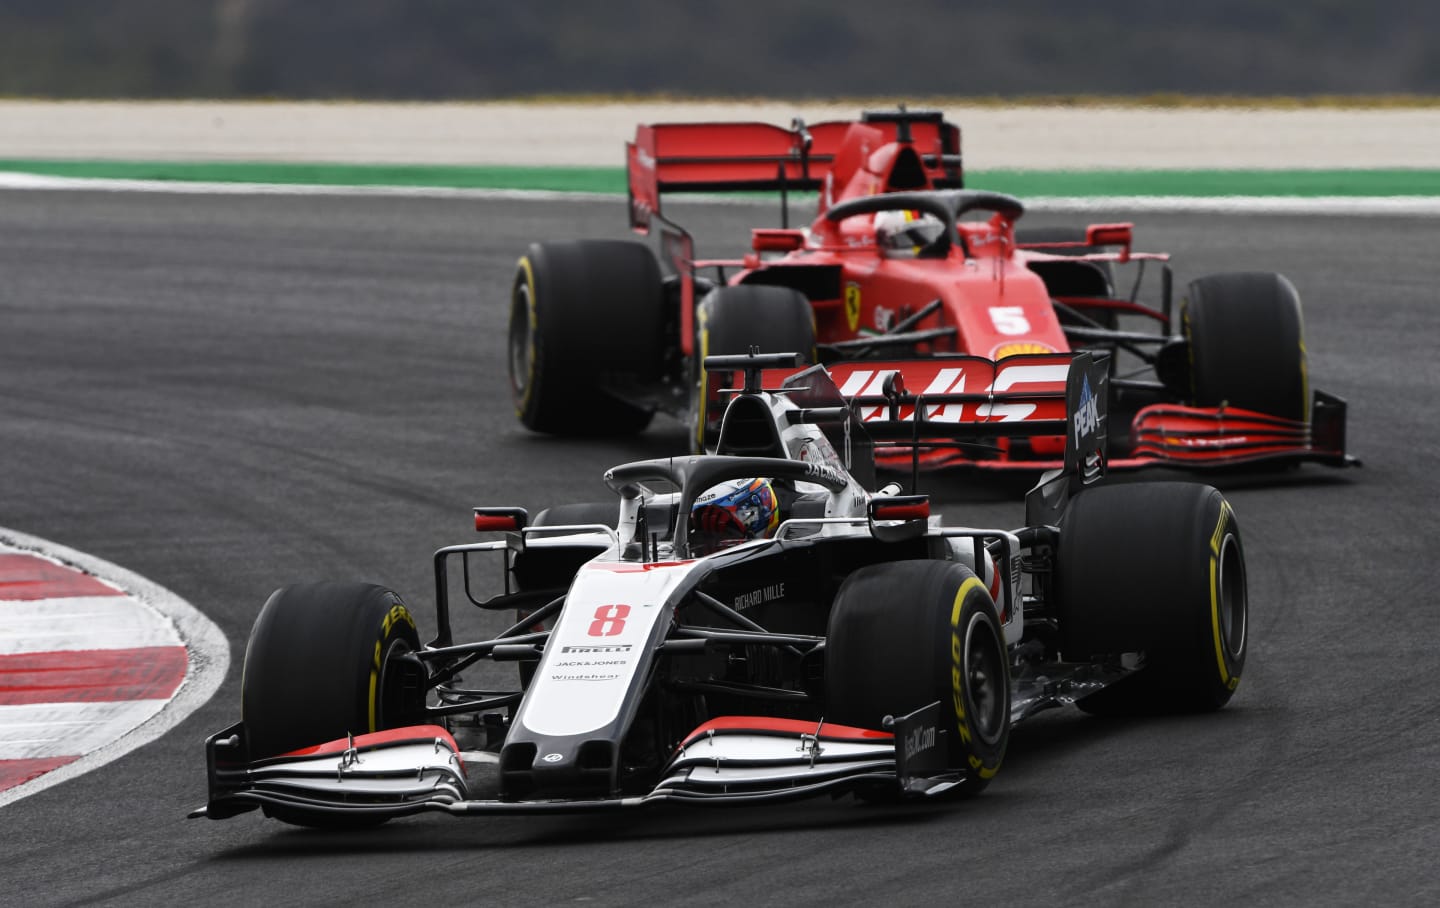 PORTIMAO, PORTUGAL - OCTOBER 25: Romain Grosjean of France driving the (8) Haas F1 Team VF-20